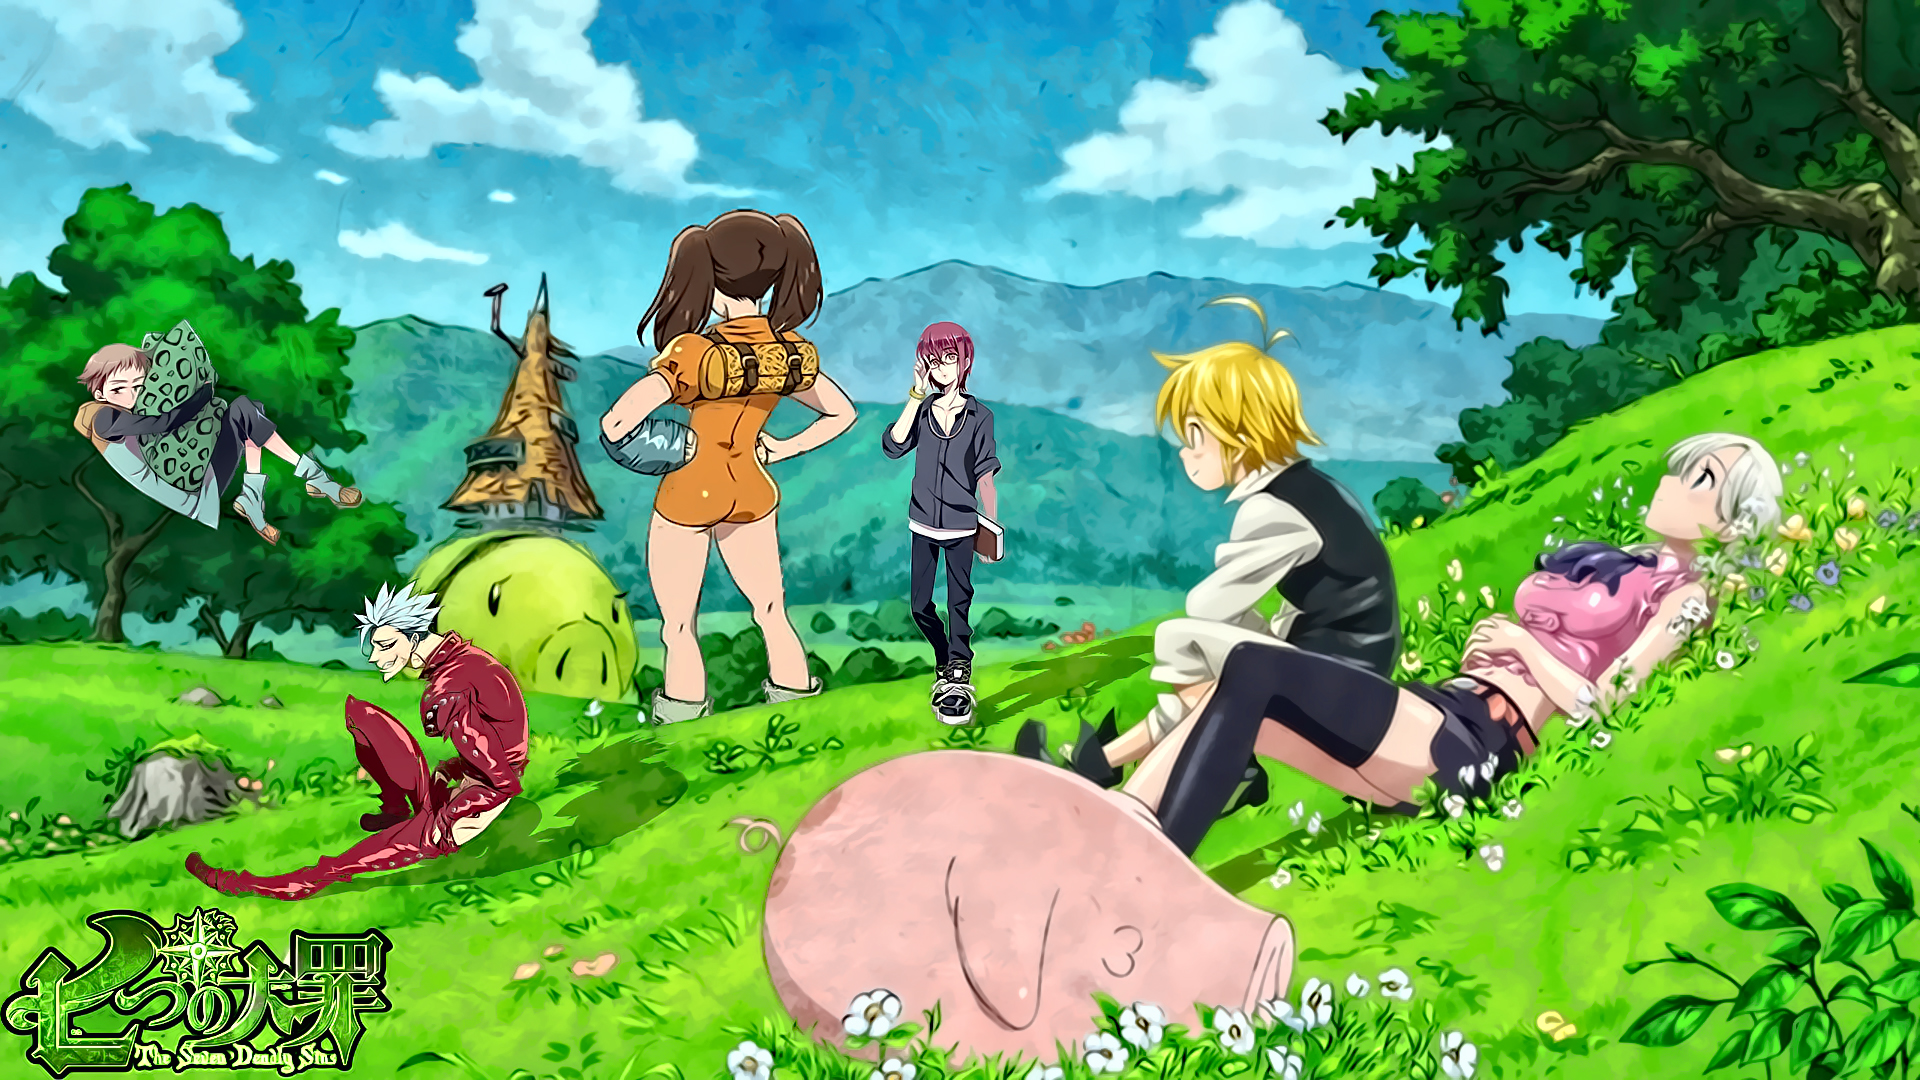 Anime The Seven Deadly Sins HD Wallpaper by Sanoboss